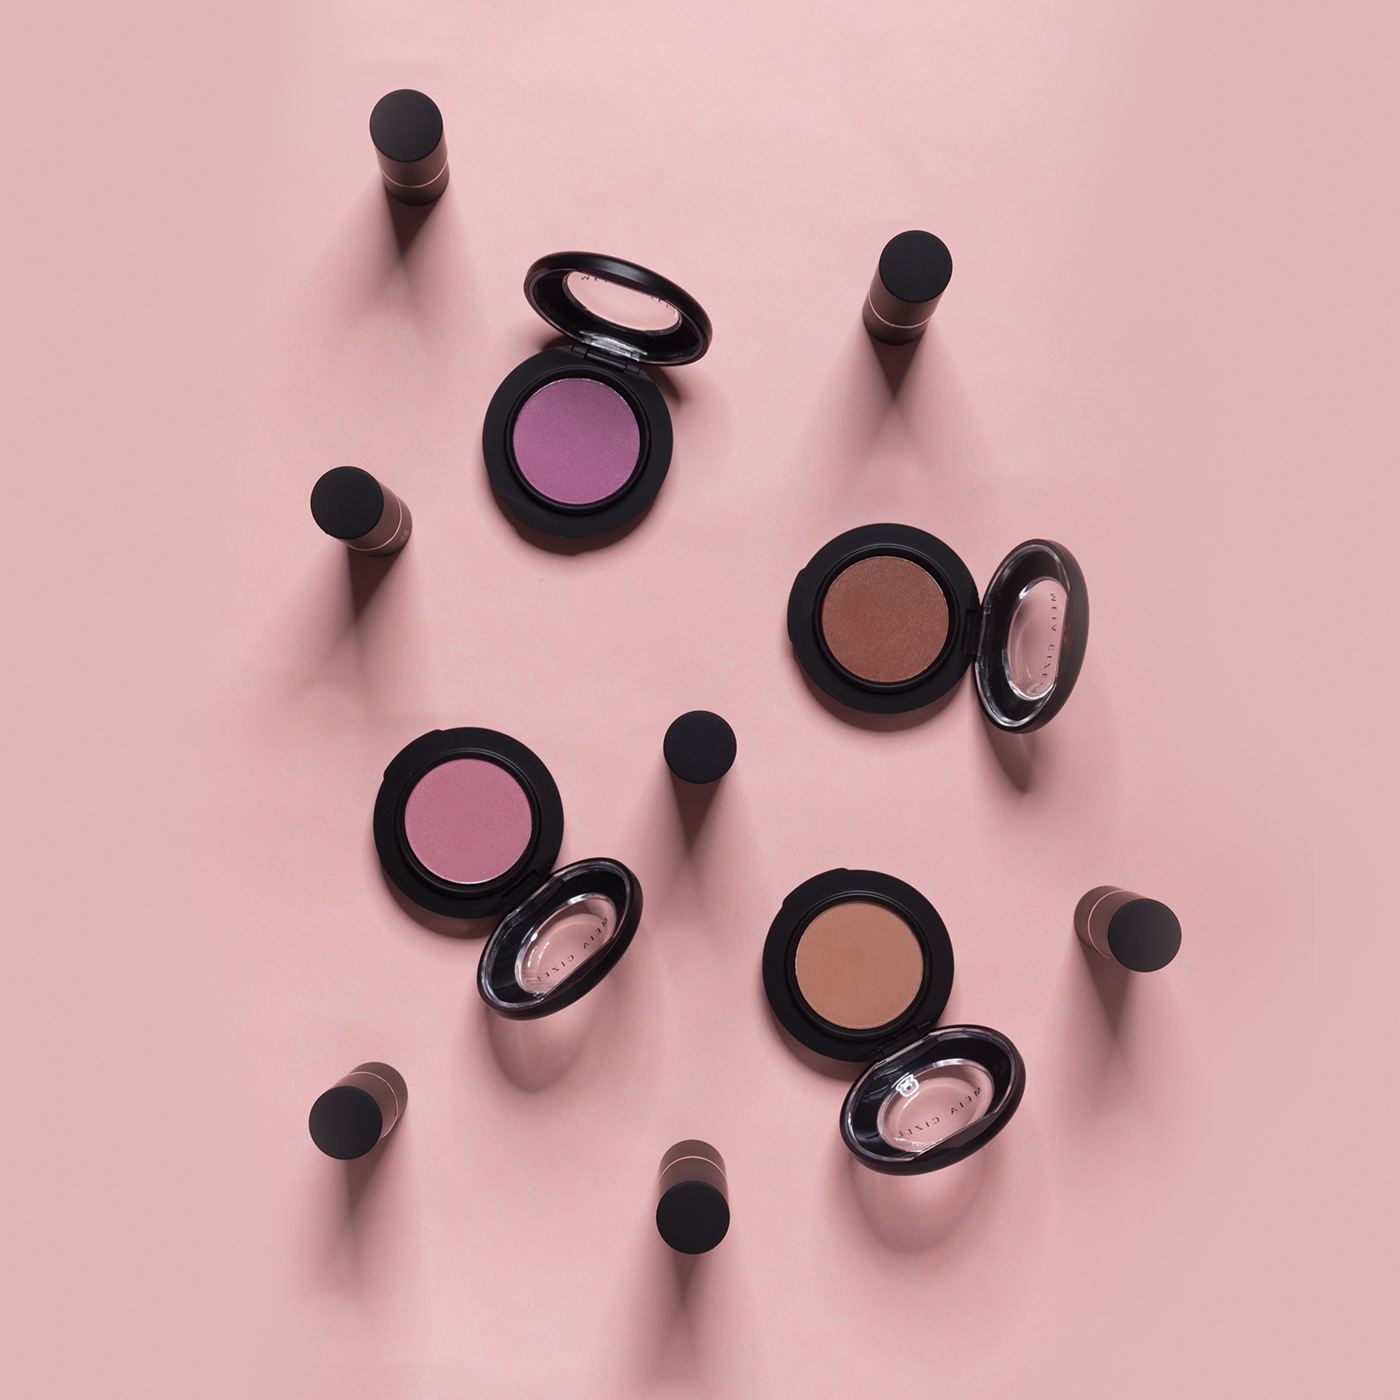 makeup maquillaje producto Contenido redes sociales content instagram flatlay cosmetica pink Packaging